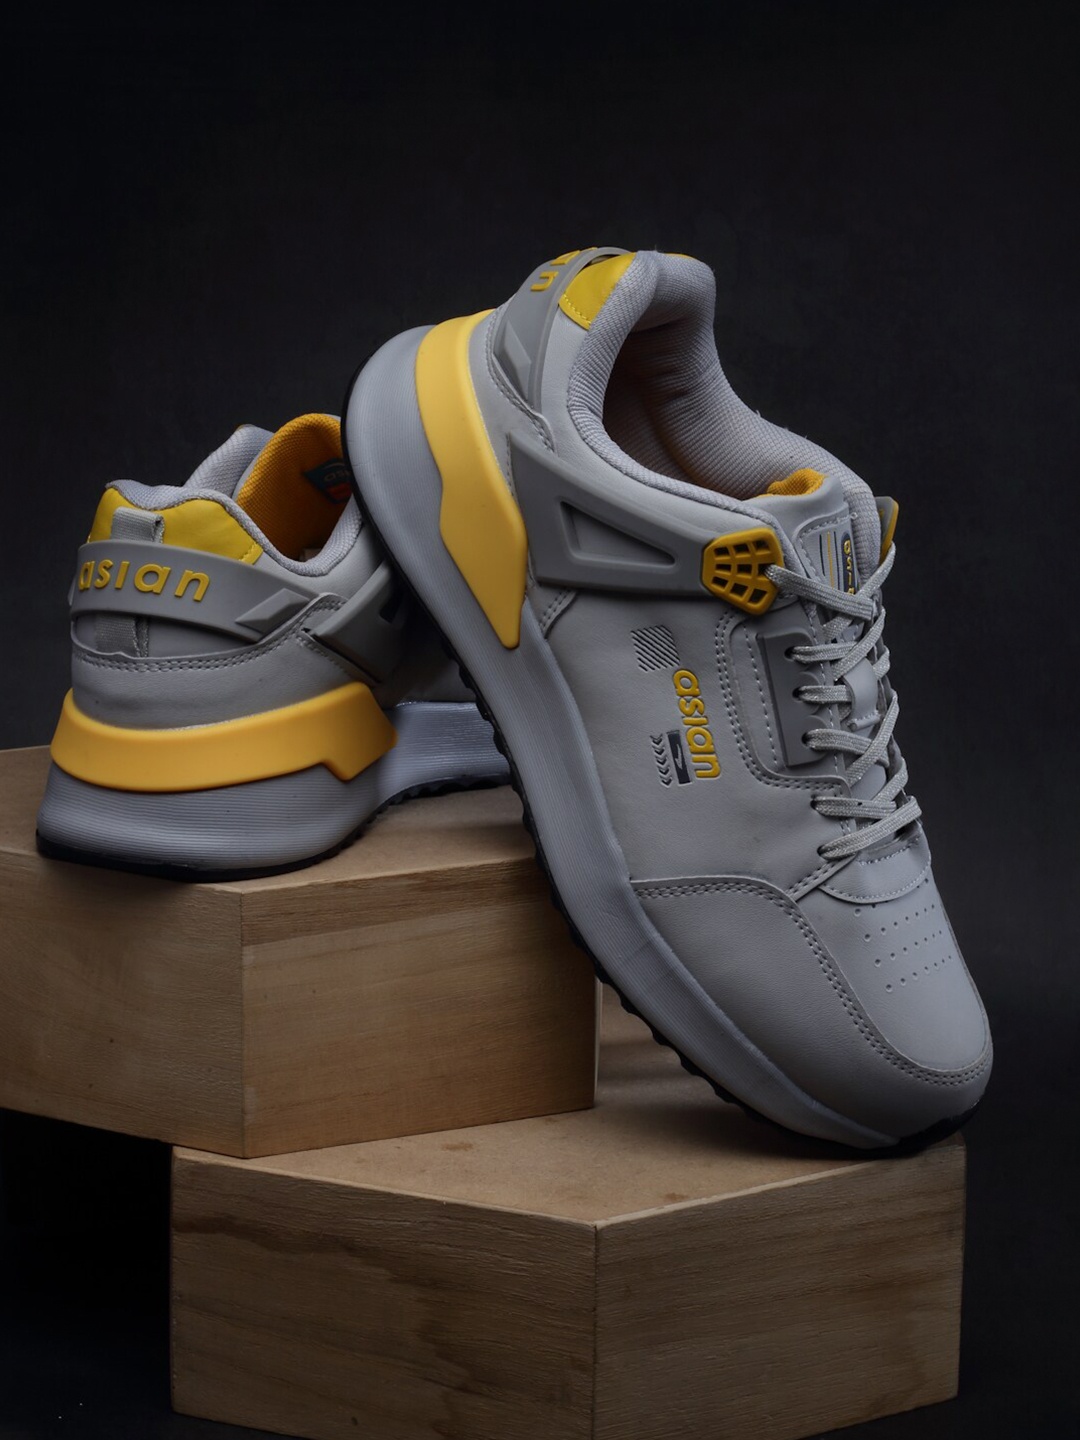 

ASIAN Men Target-01 Lace-Up Running Shoes, Grey